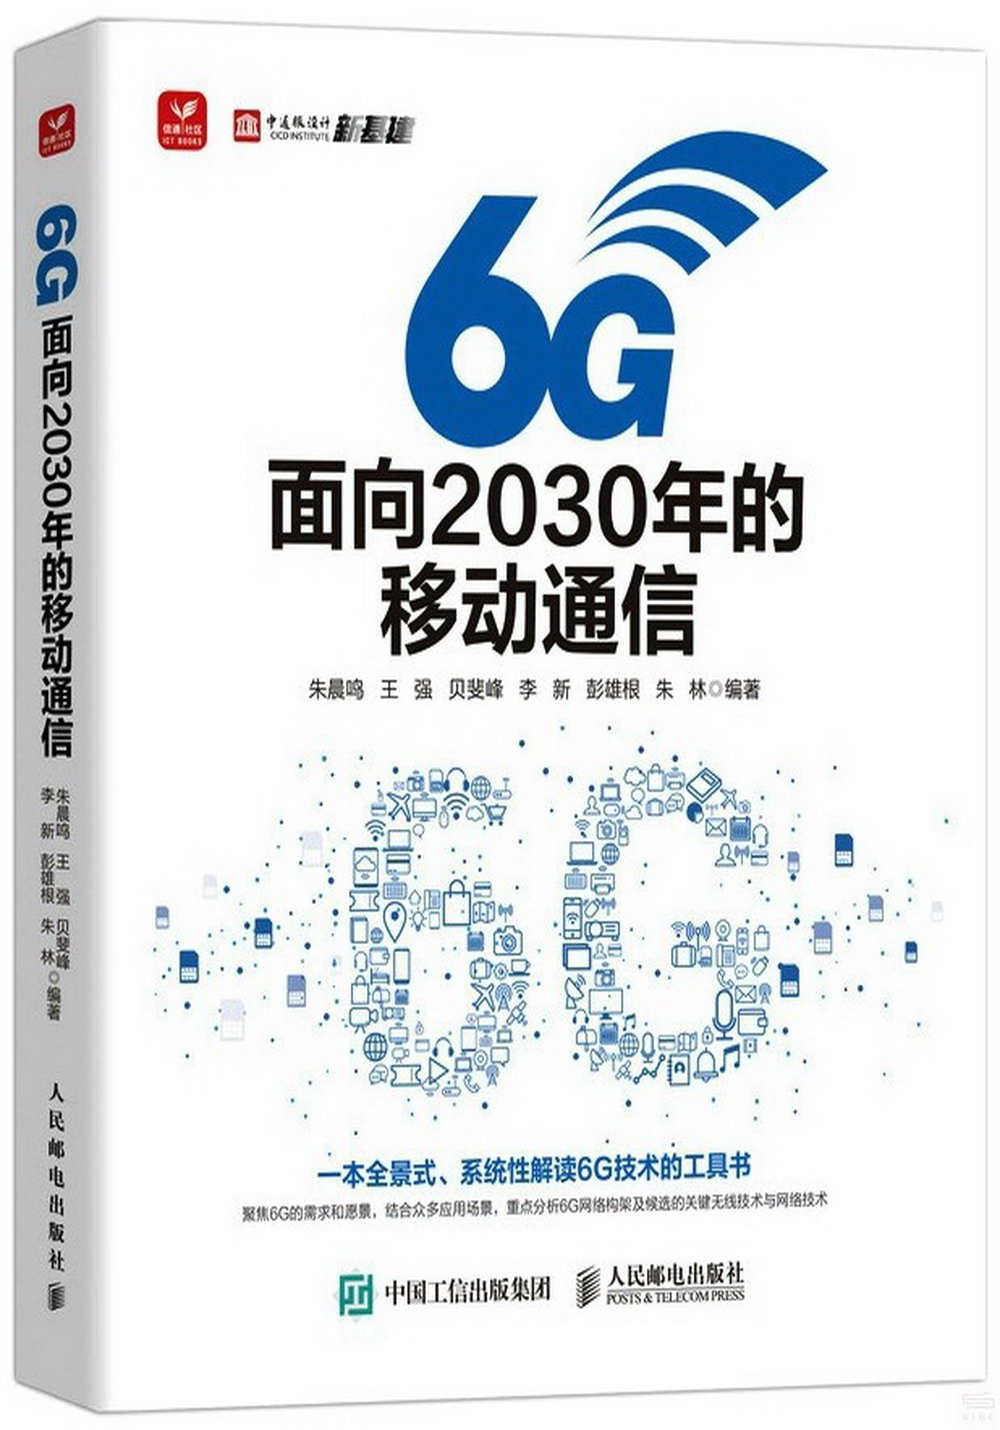 6G：面向2030年的移動通信